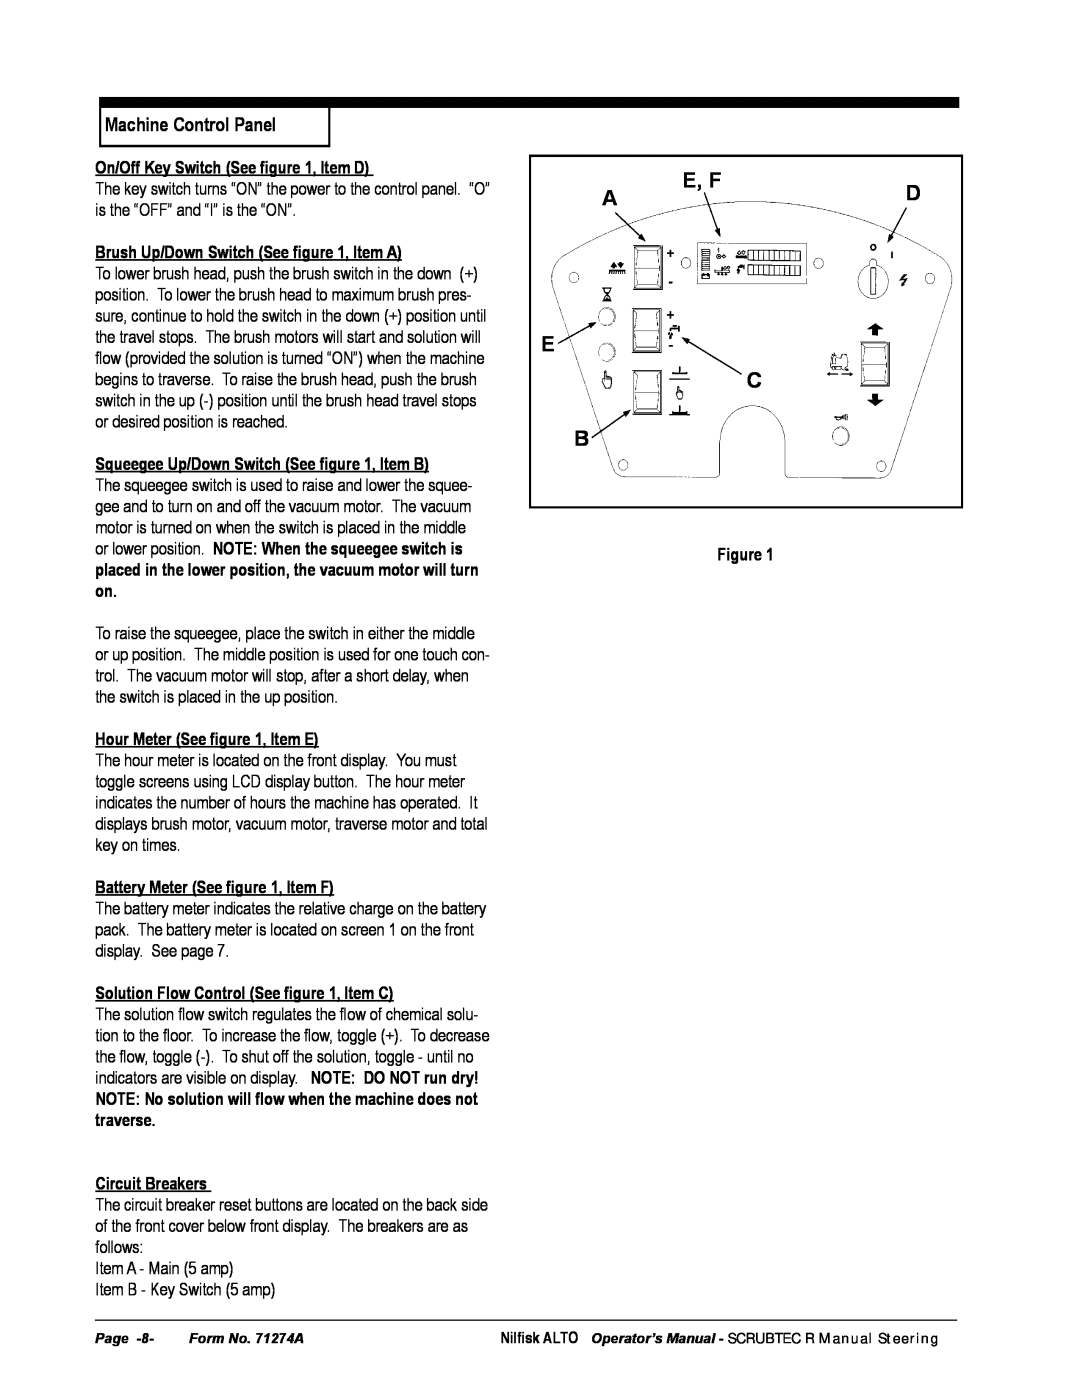 Nilfisk-ALTO 586, 571 manual E, F Ad E C B, Machine Control Panel 